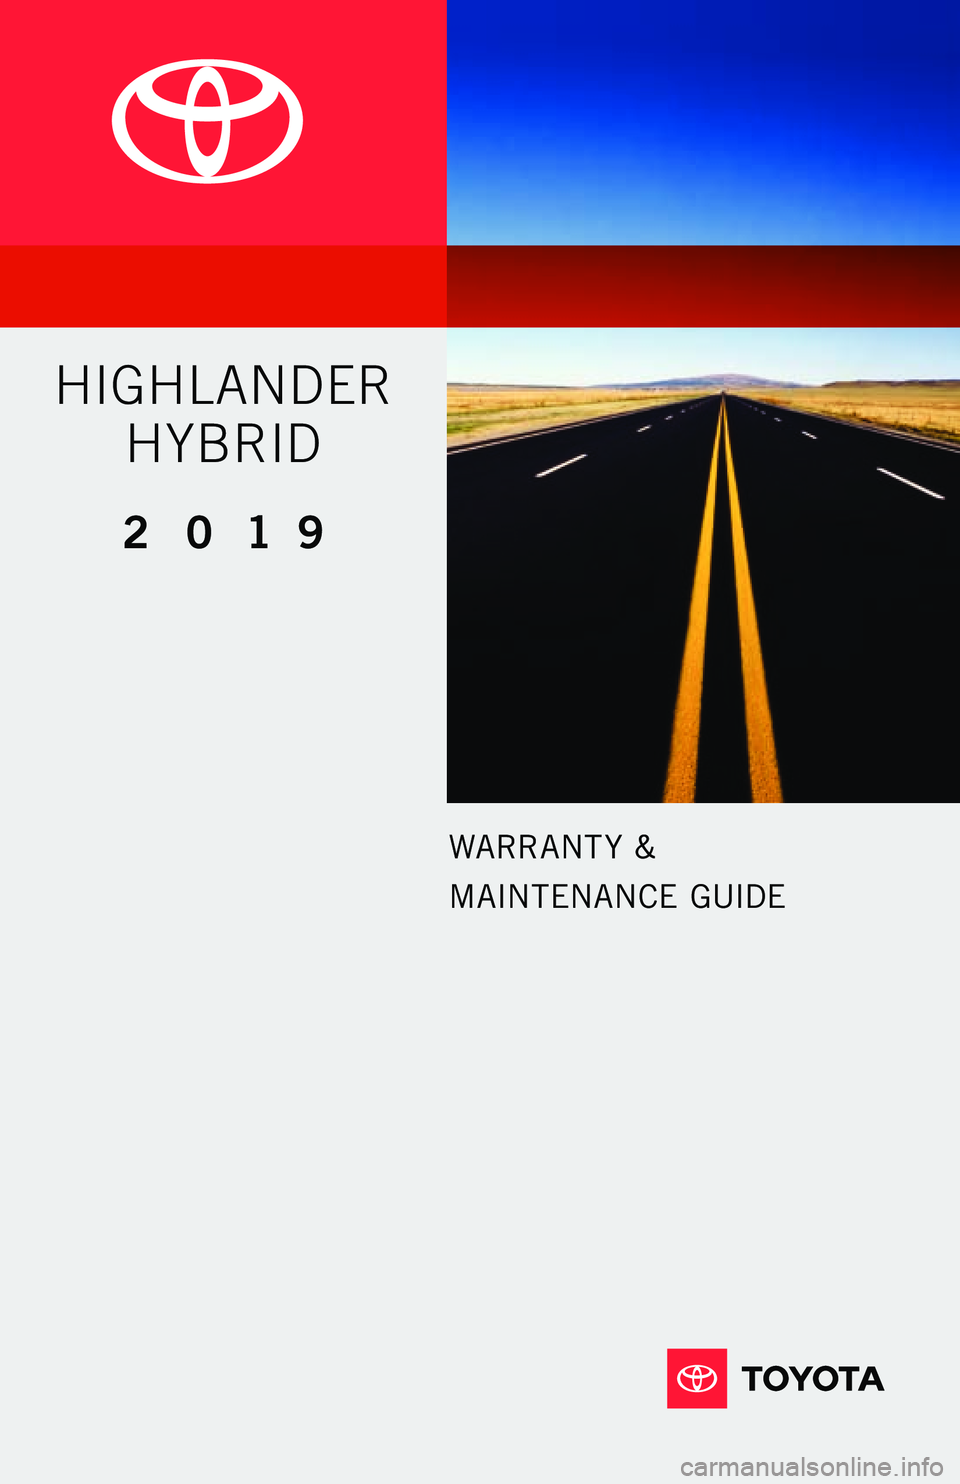 TOYOTA HIGHLANDER HYBRID 2019  Warranties & Maintenance Guides (in English) WARRANT Y &
MAINTENANCE GUIDE
2 0 19
HIGHLANDER  
HYBRID  